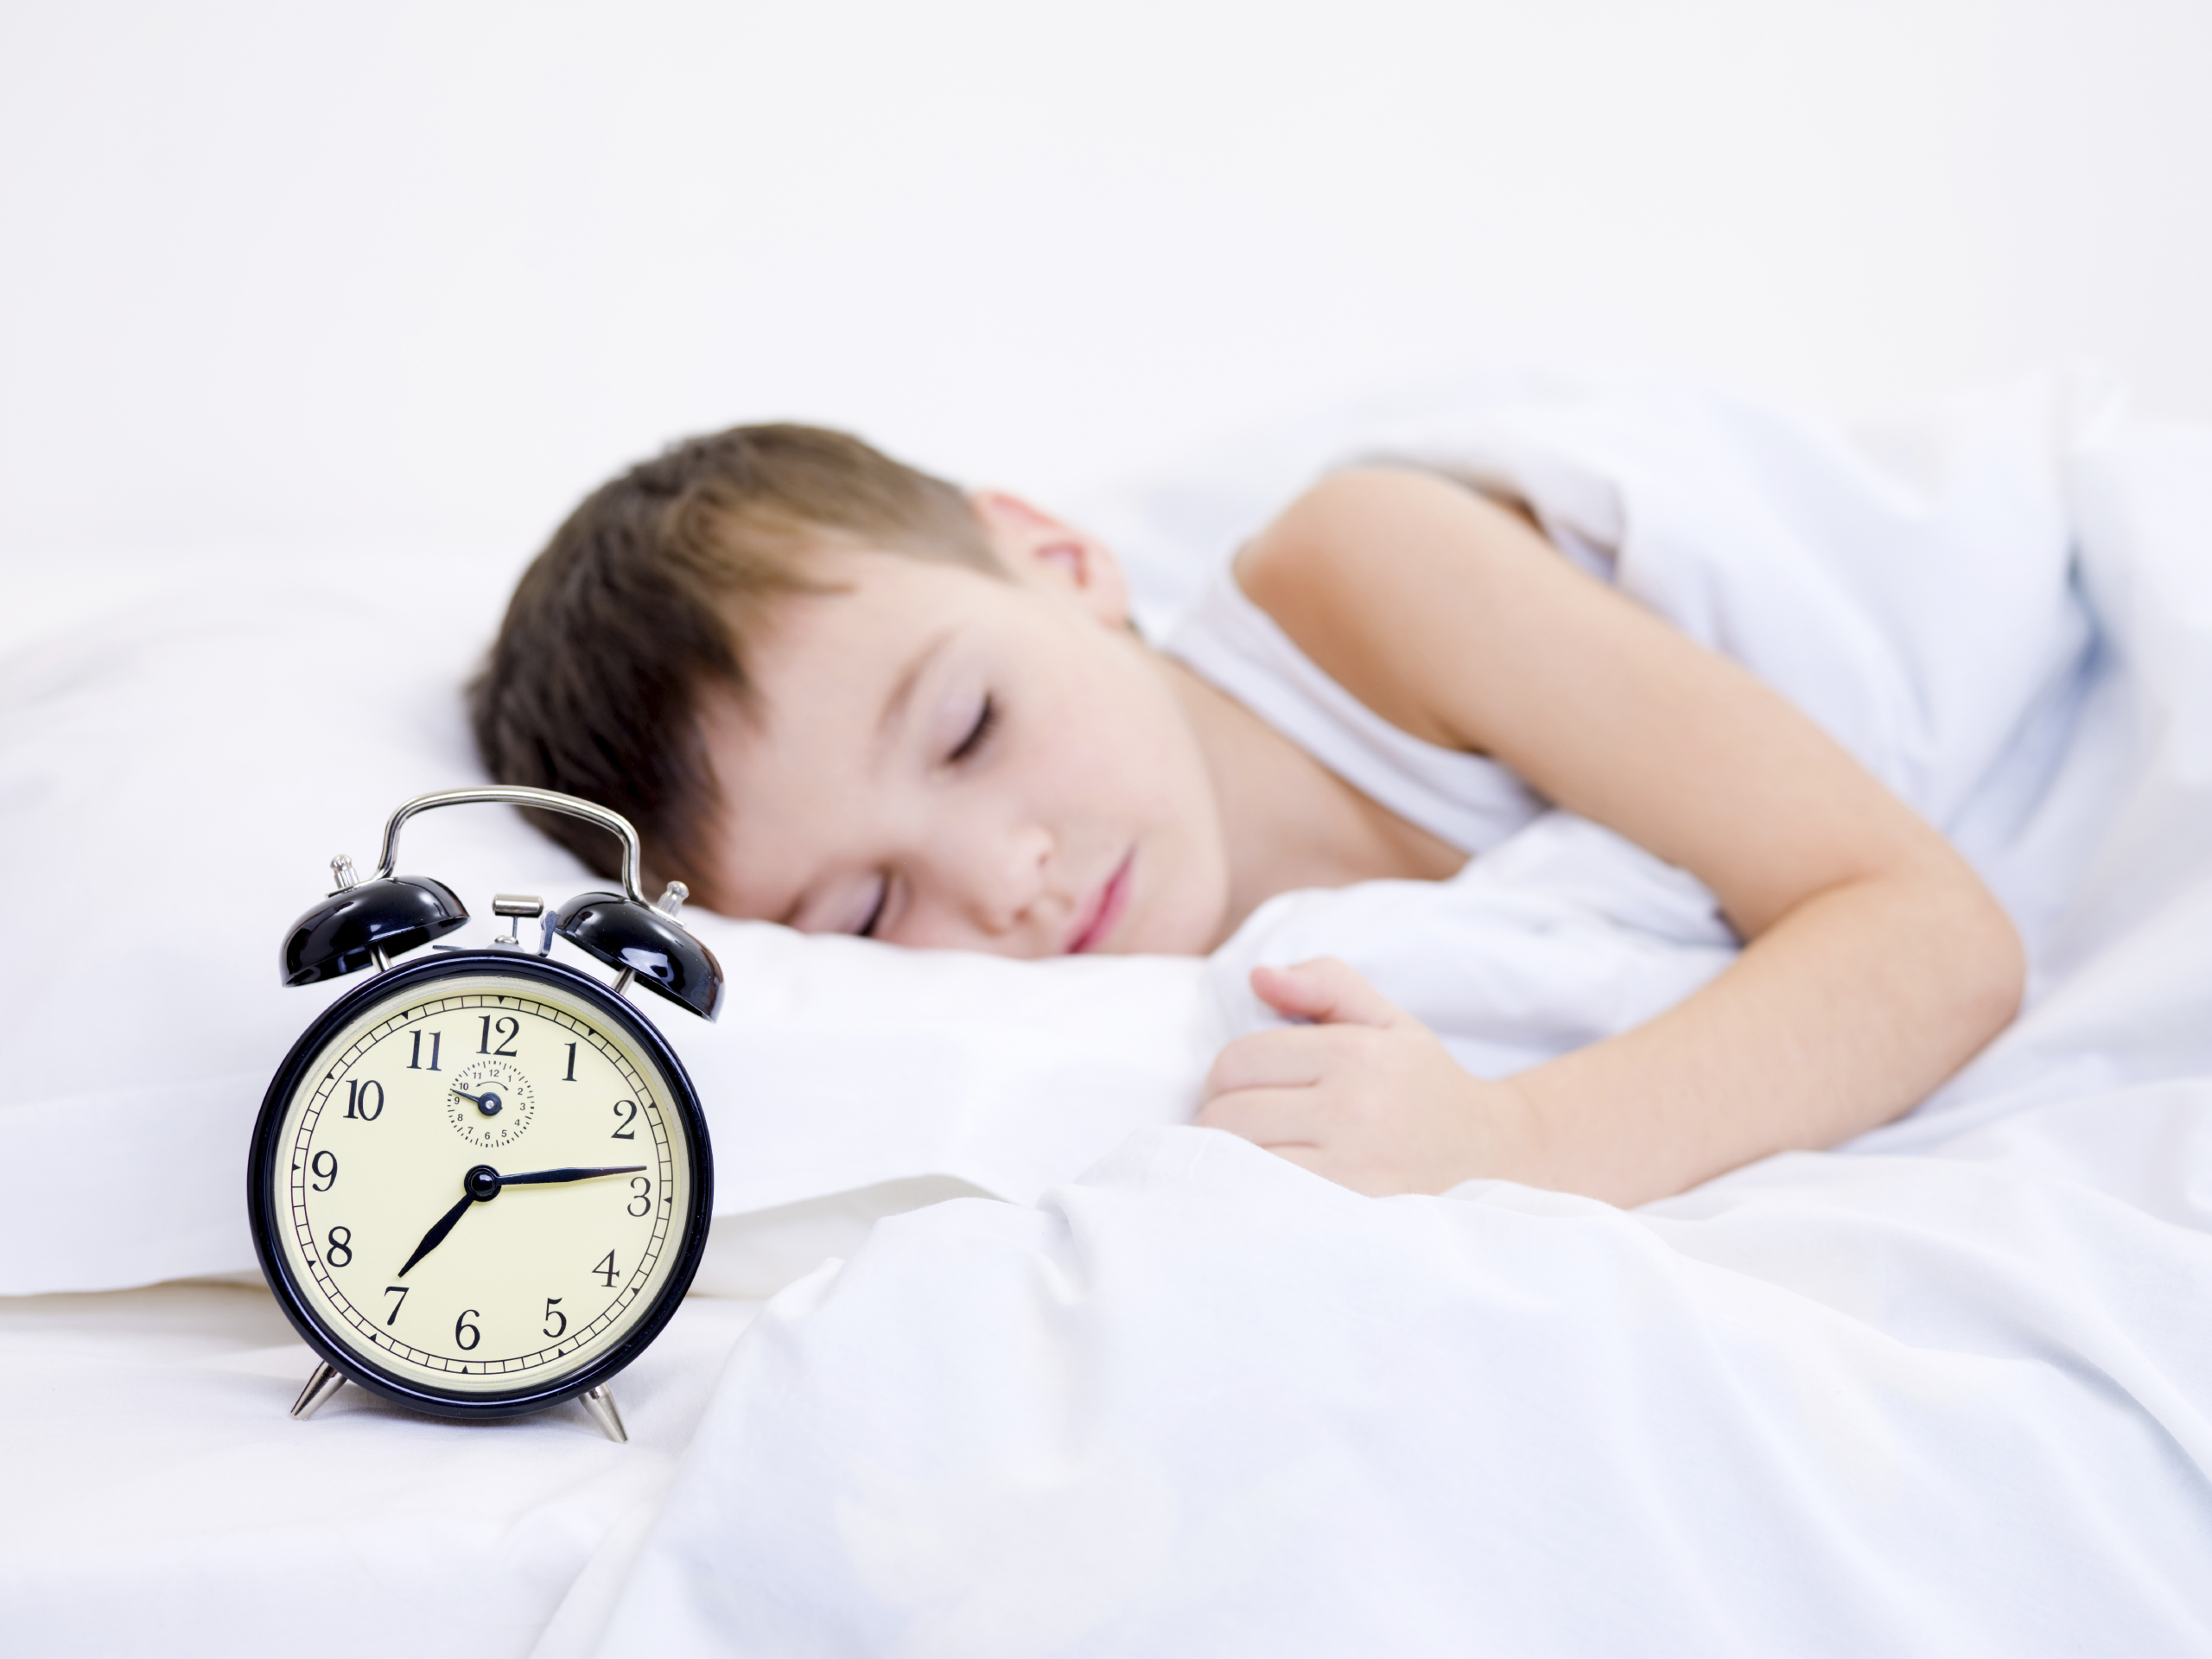 Little boy sleeping with alarm clock near his head